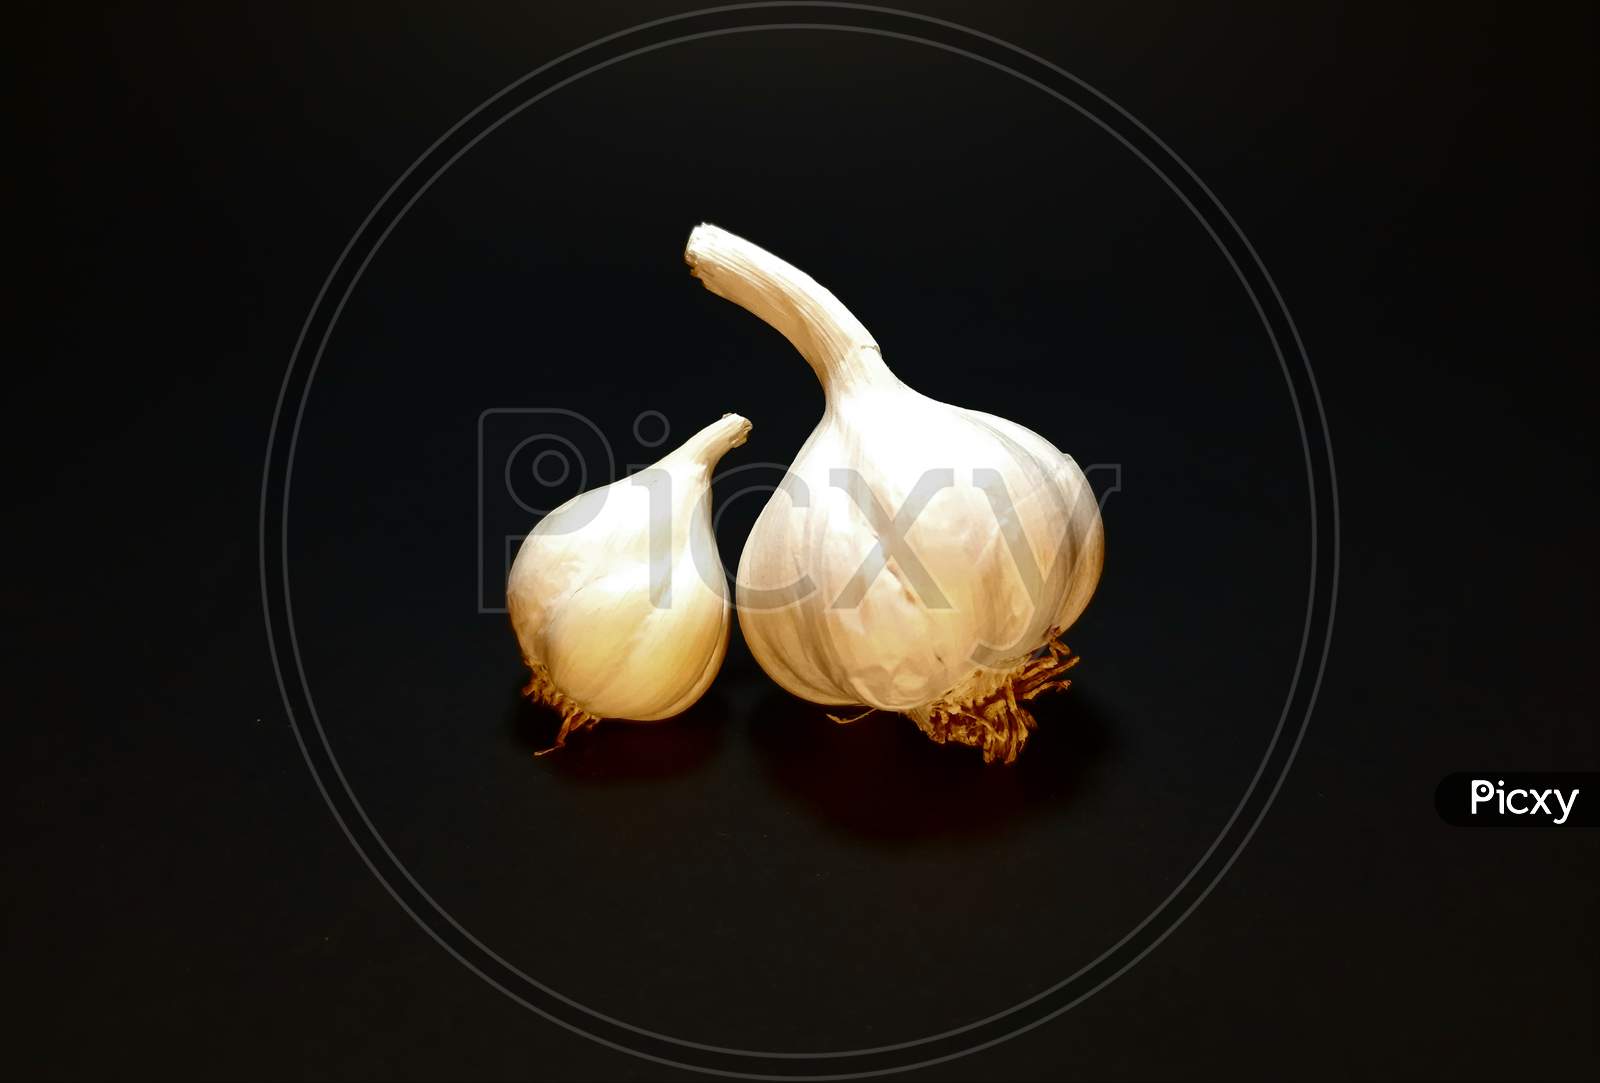 Garlic On Black Background Images Stock Photos